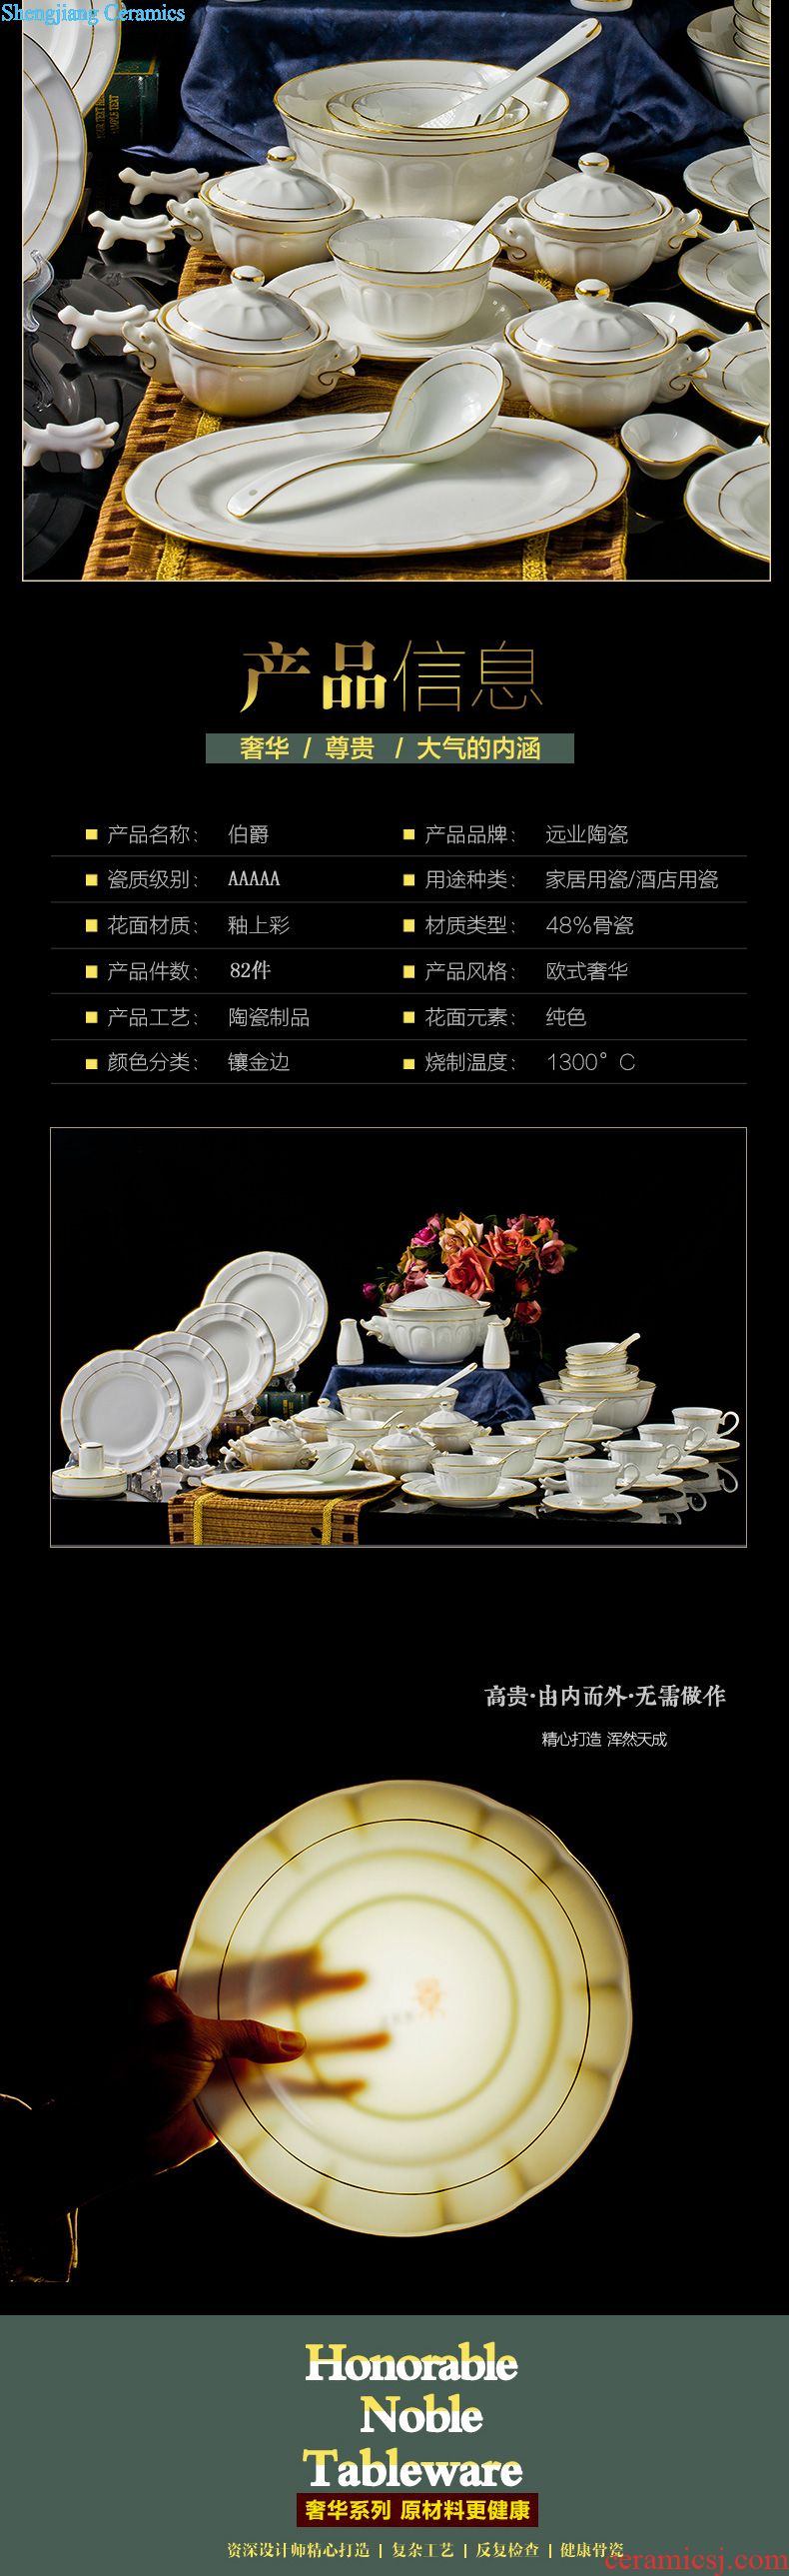 Jingdezhen ceramic tableware suit 56 head far industry ceramics bowl dishes suit European gold edge lily